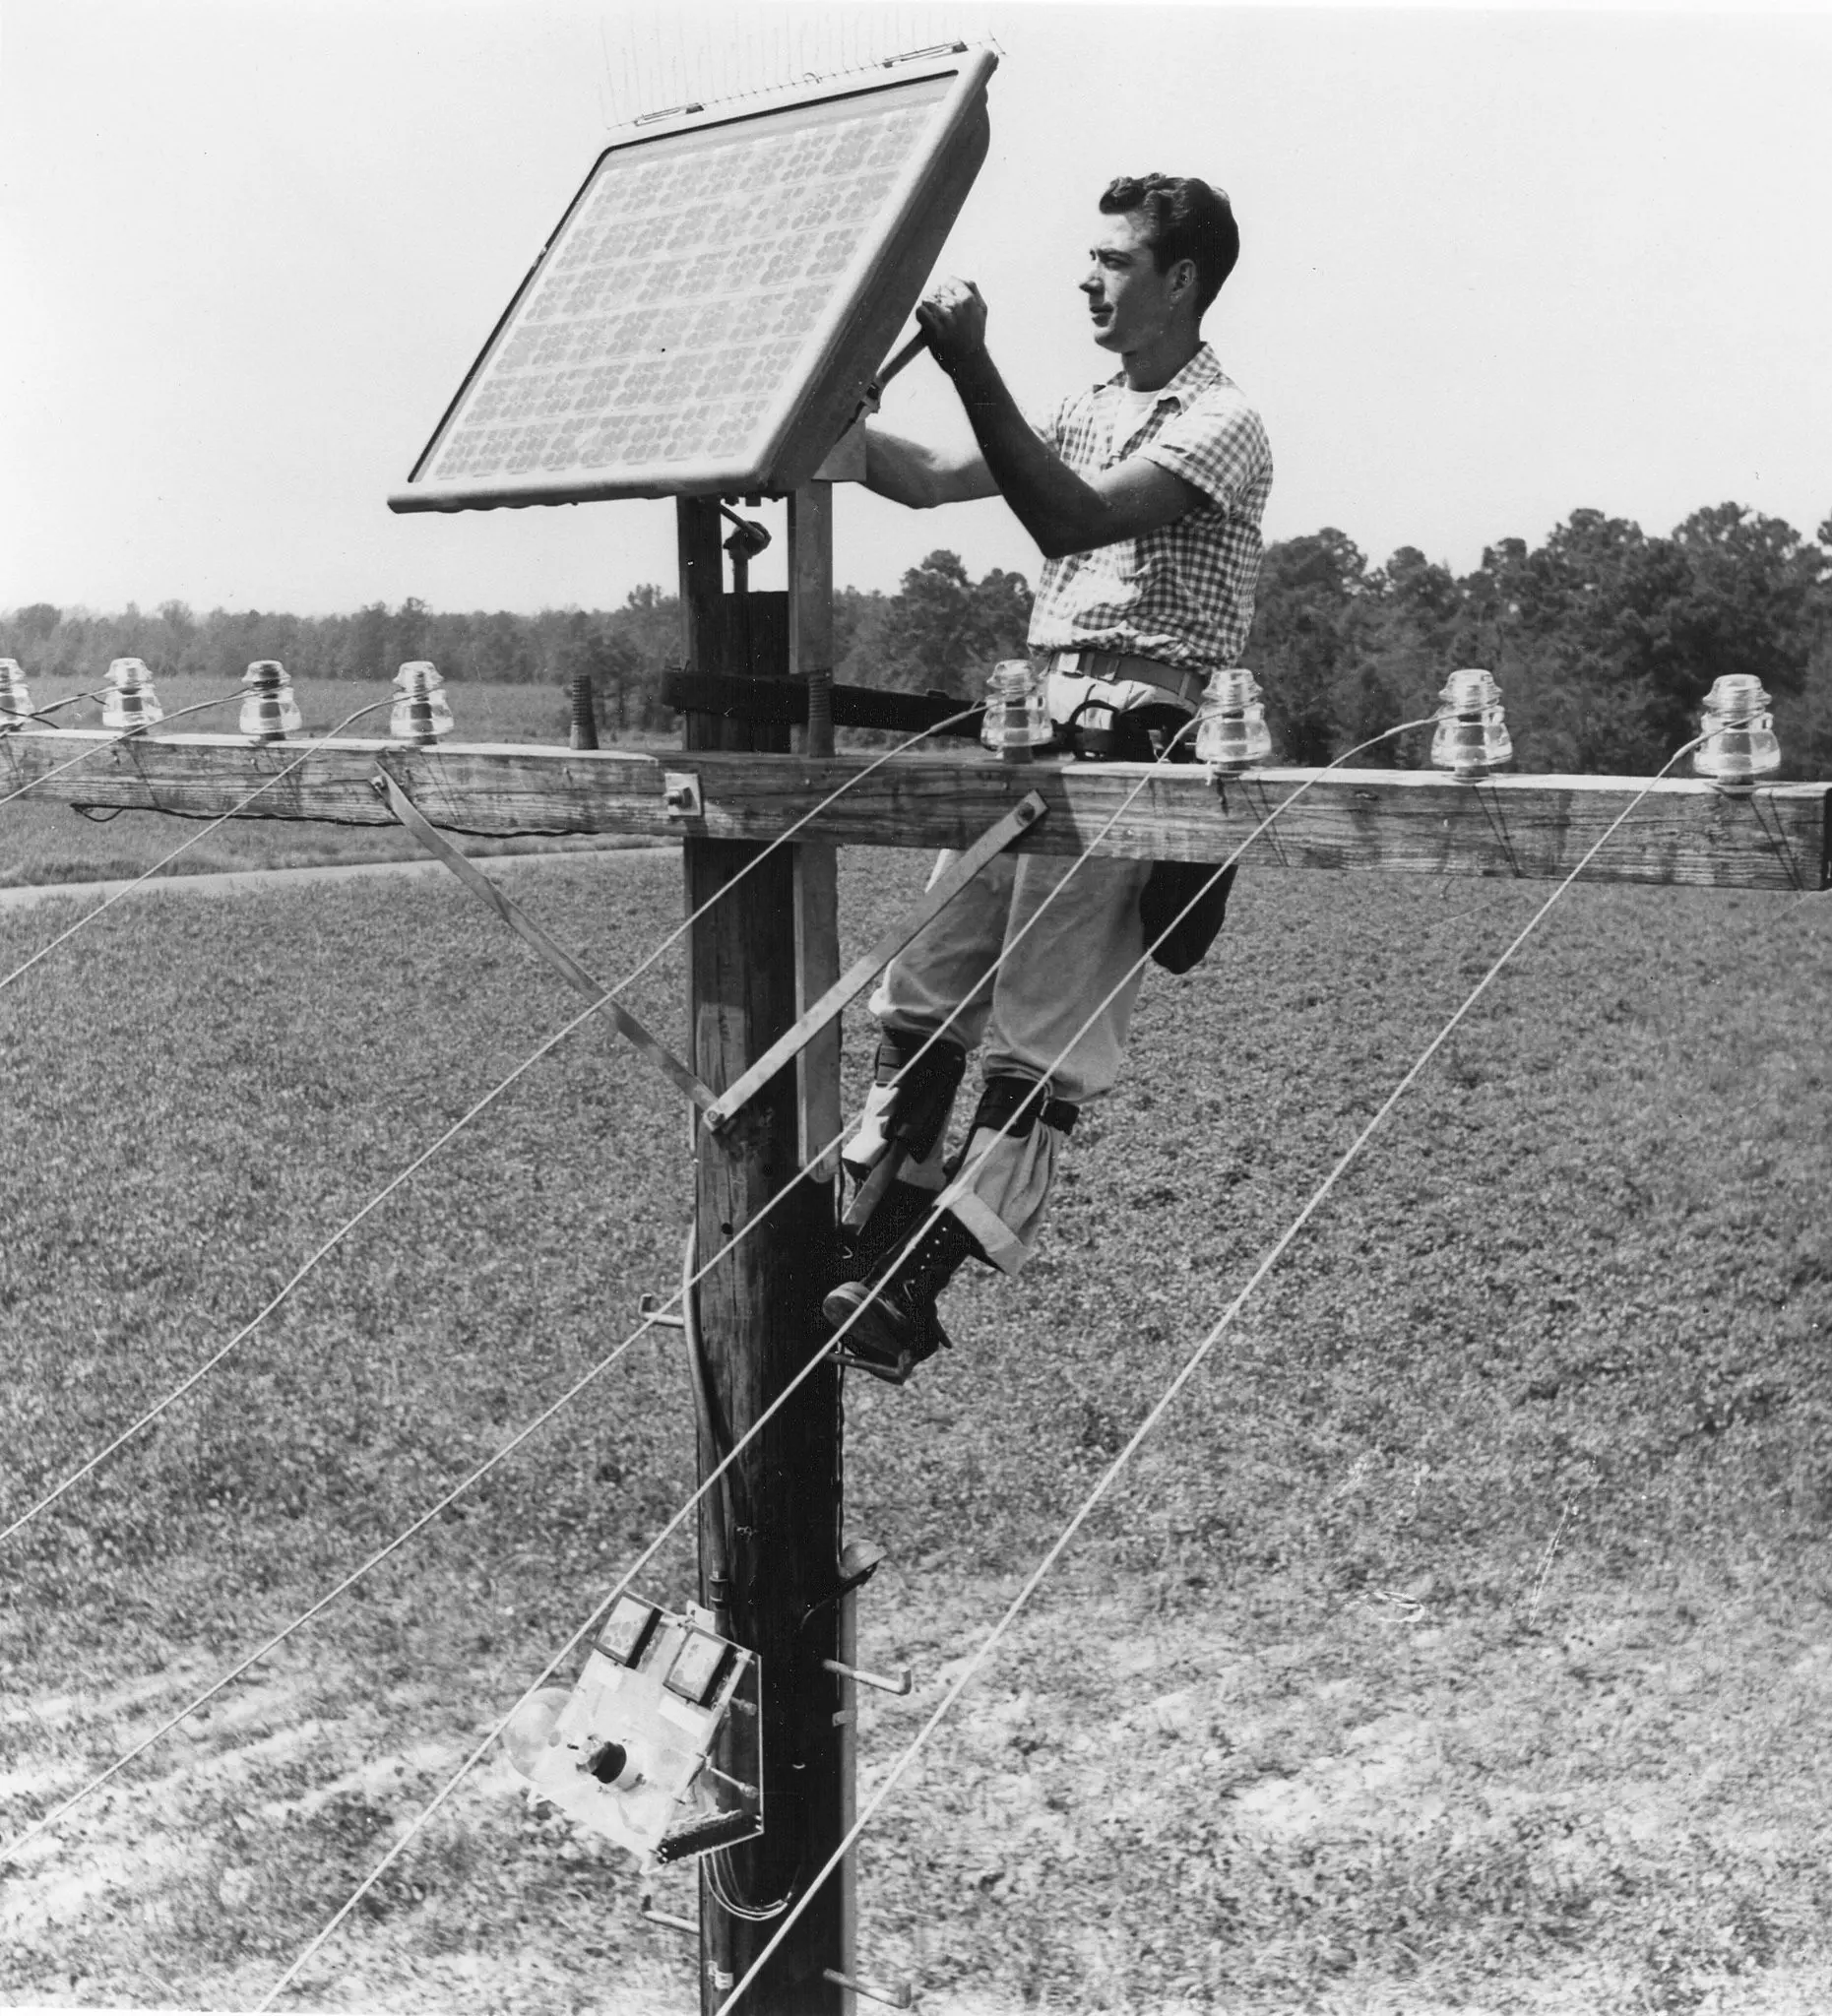 who invented solar panels - Did Australia invent solar panels